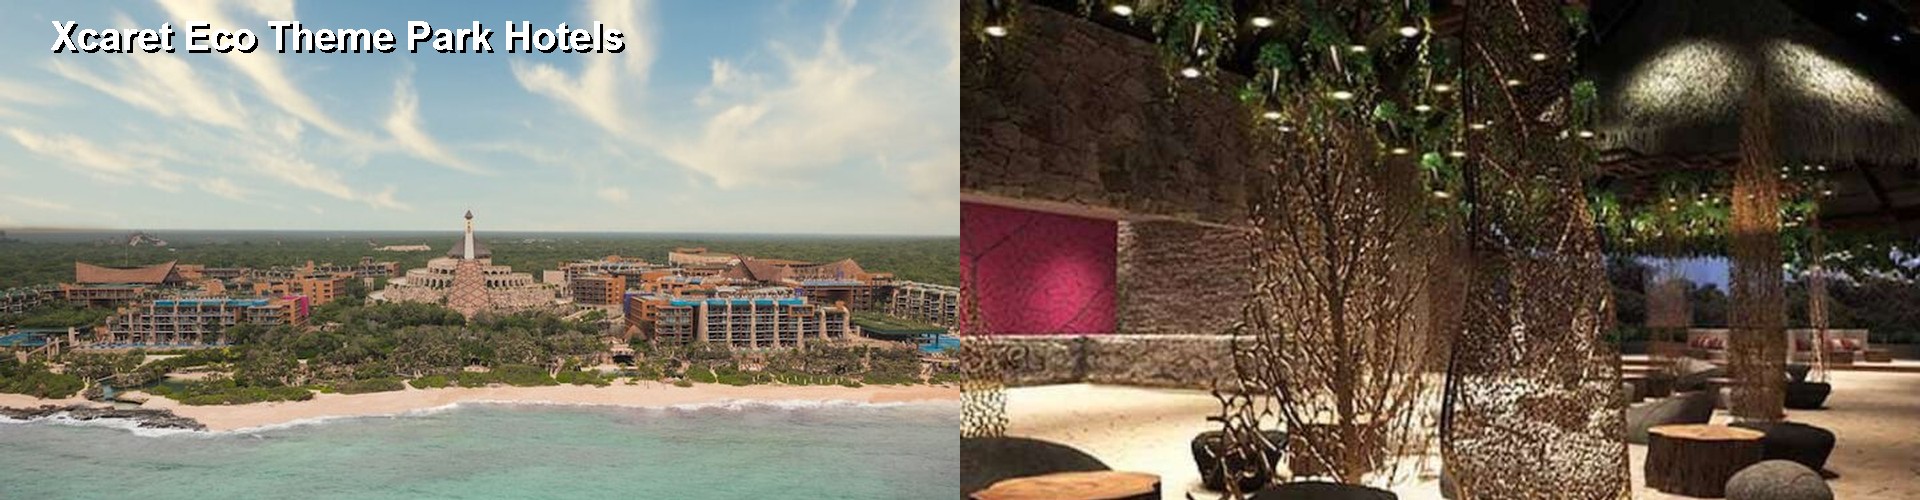 5 Best Hotels near Xcaret Eco Theme Park